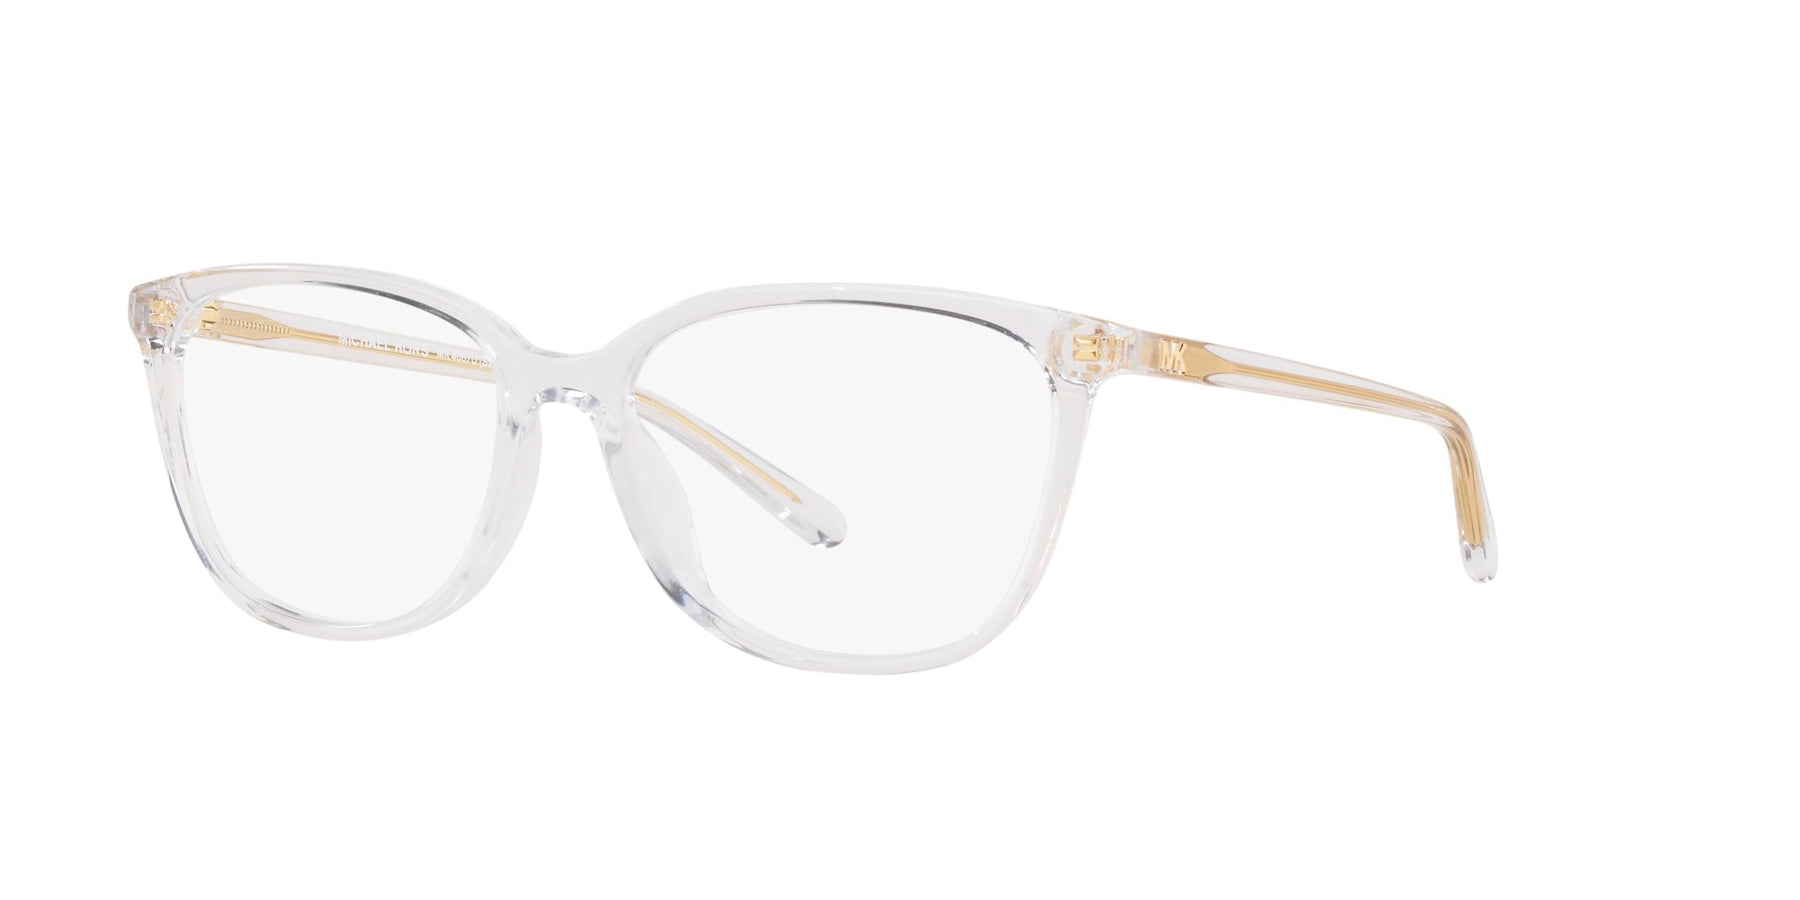 Michael Kors Clear Transparent Eyeglasses  Glassescom  Free Shipping